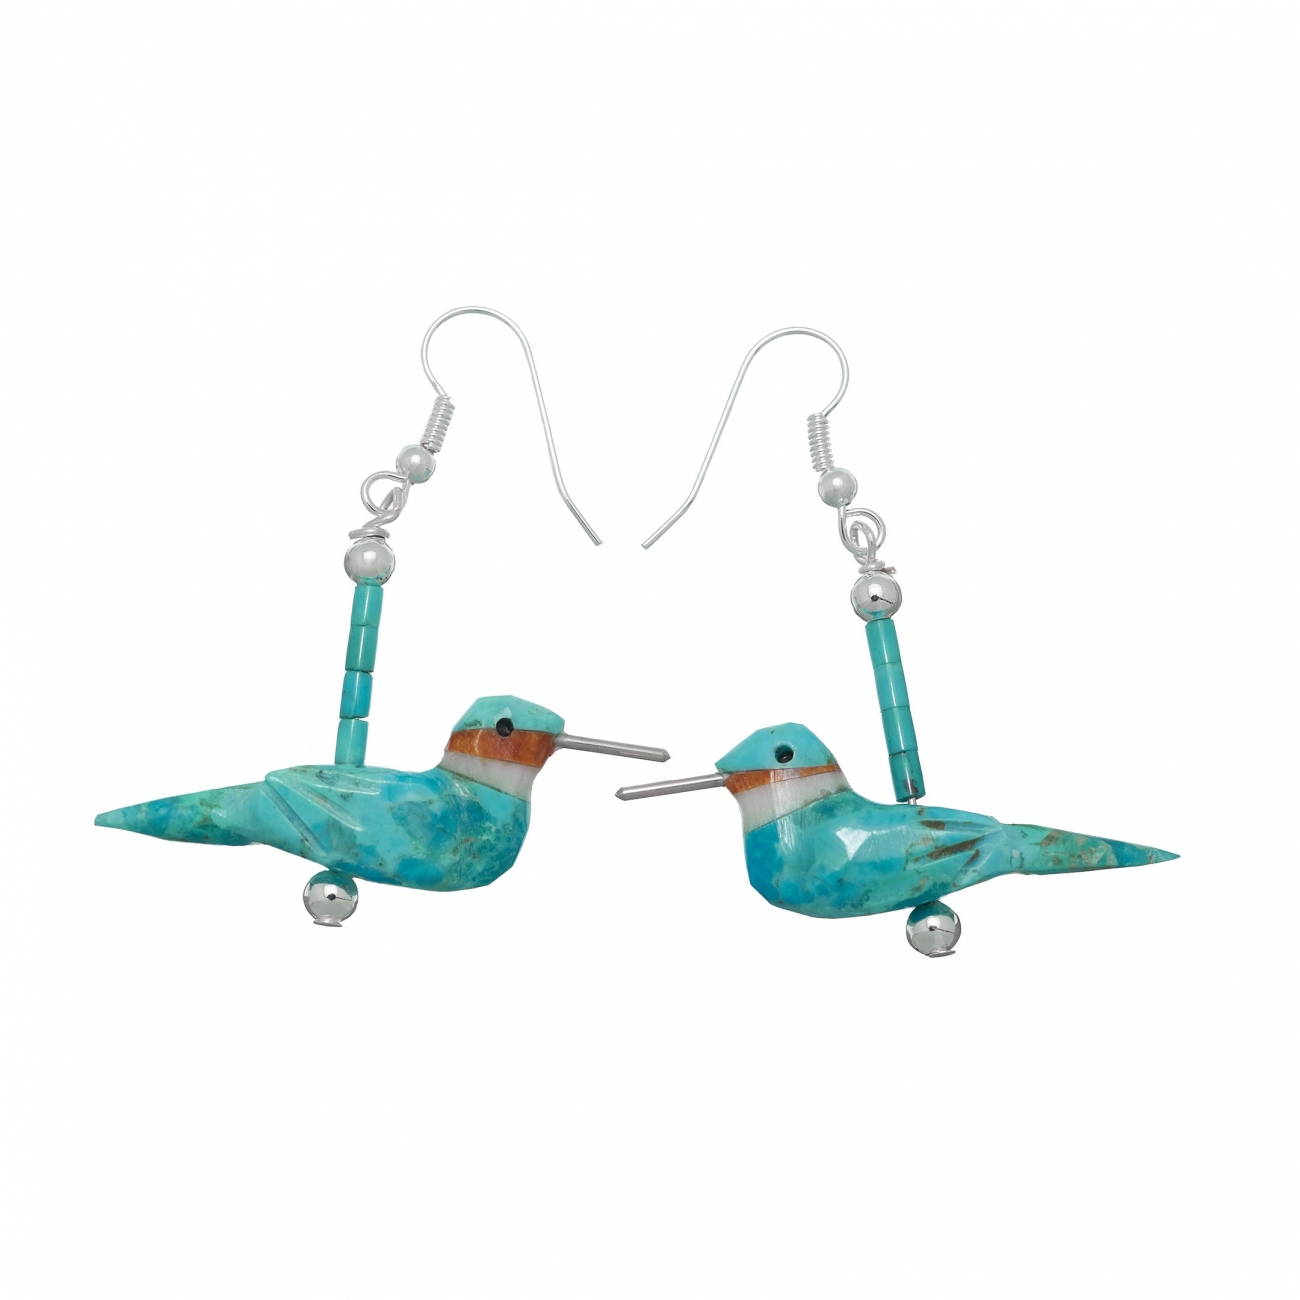 Harpo Paris earrings BOw78 in turquoise